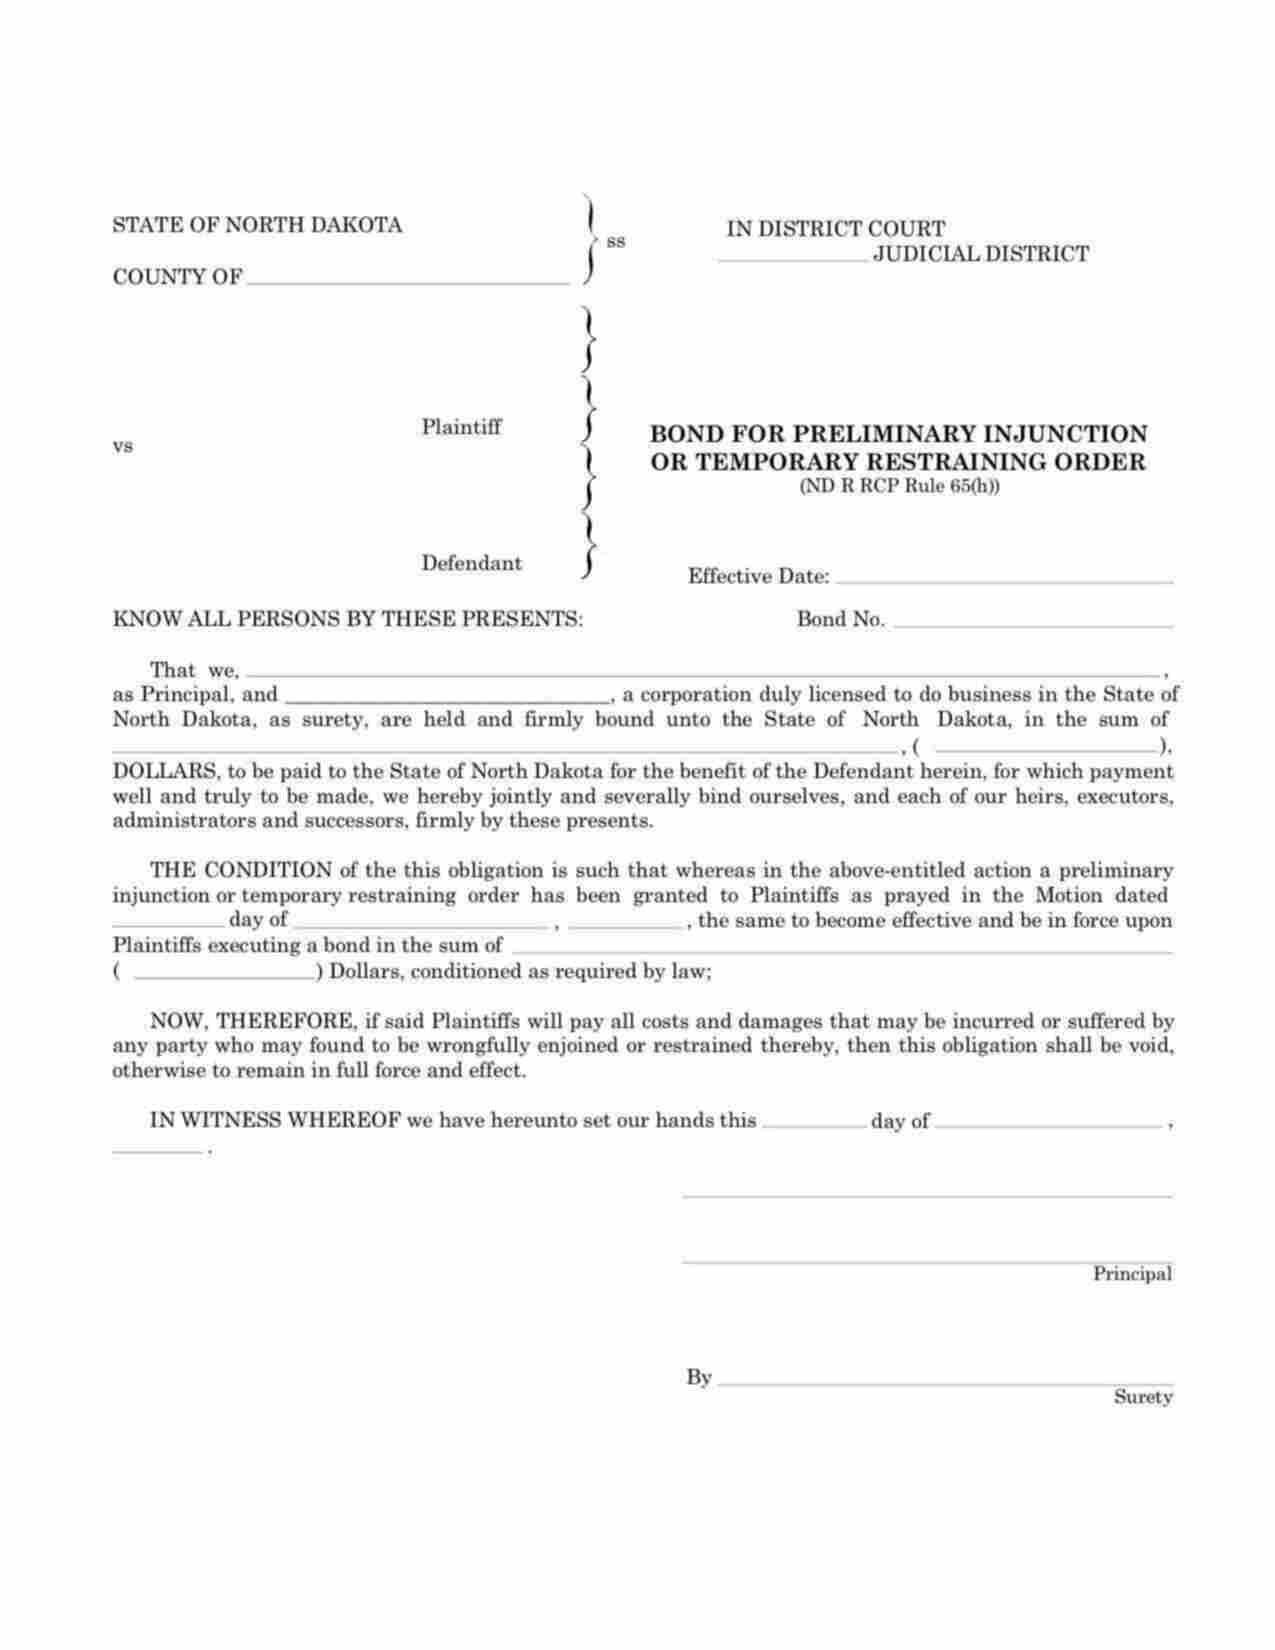 North Dakota Preliminary Injunction or Temporary Restraining Order Bond Form